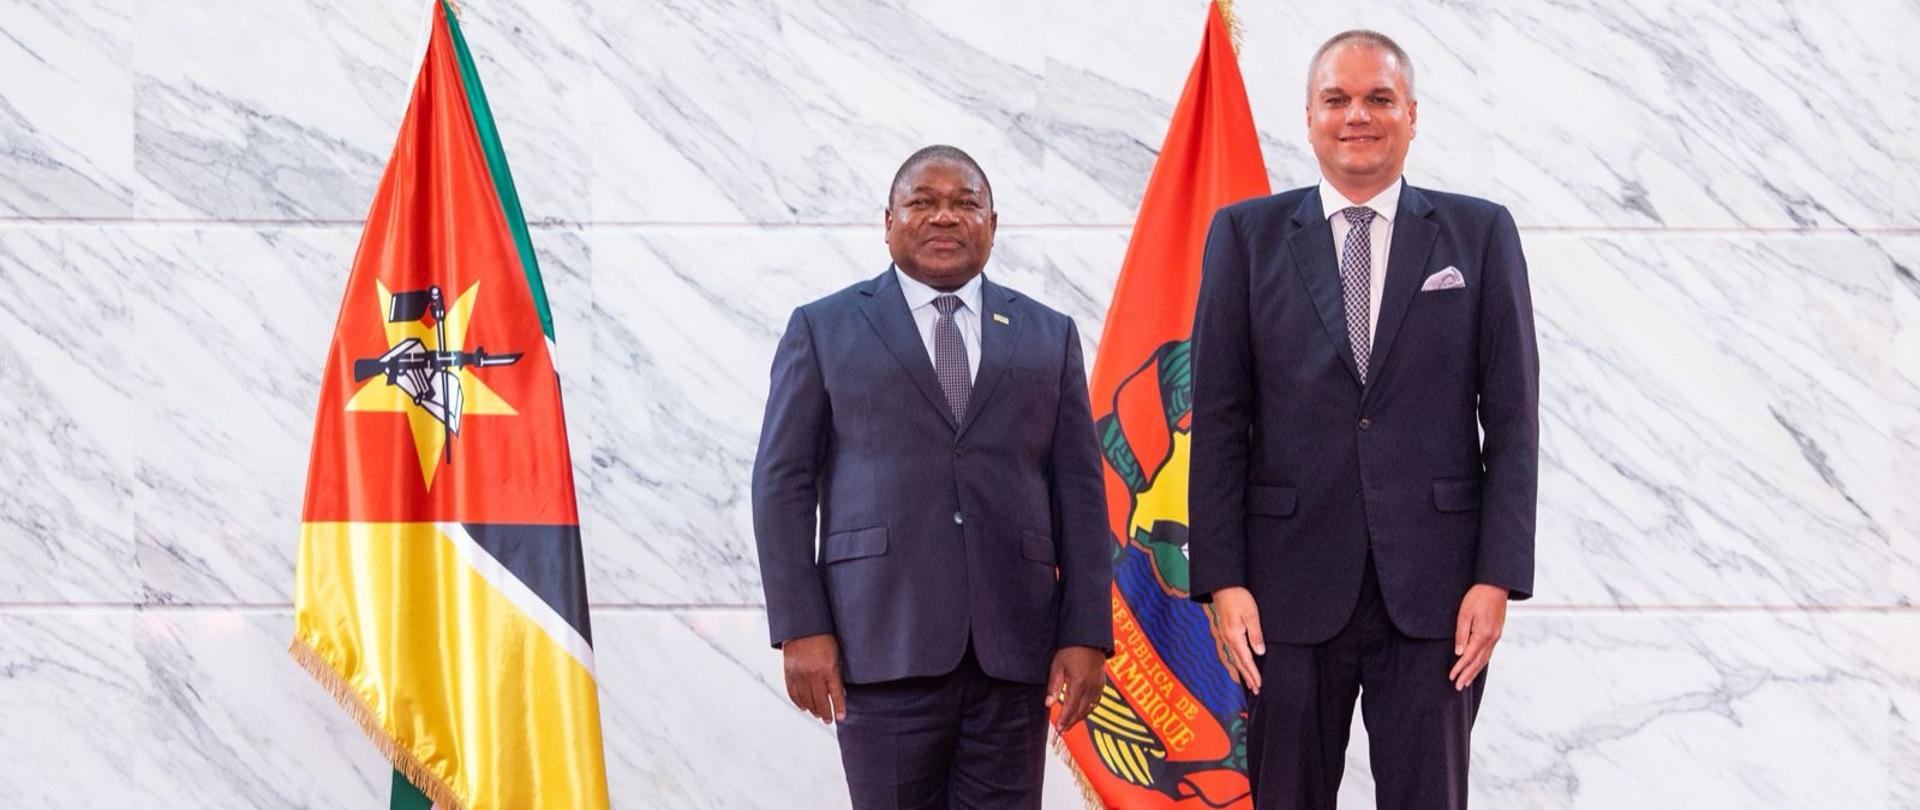 Ambassador Adam Burakowski presents his credentials in the Republic of Mozambique